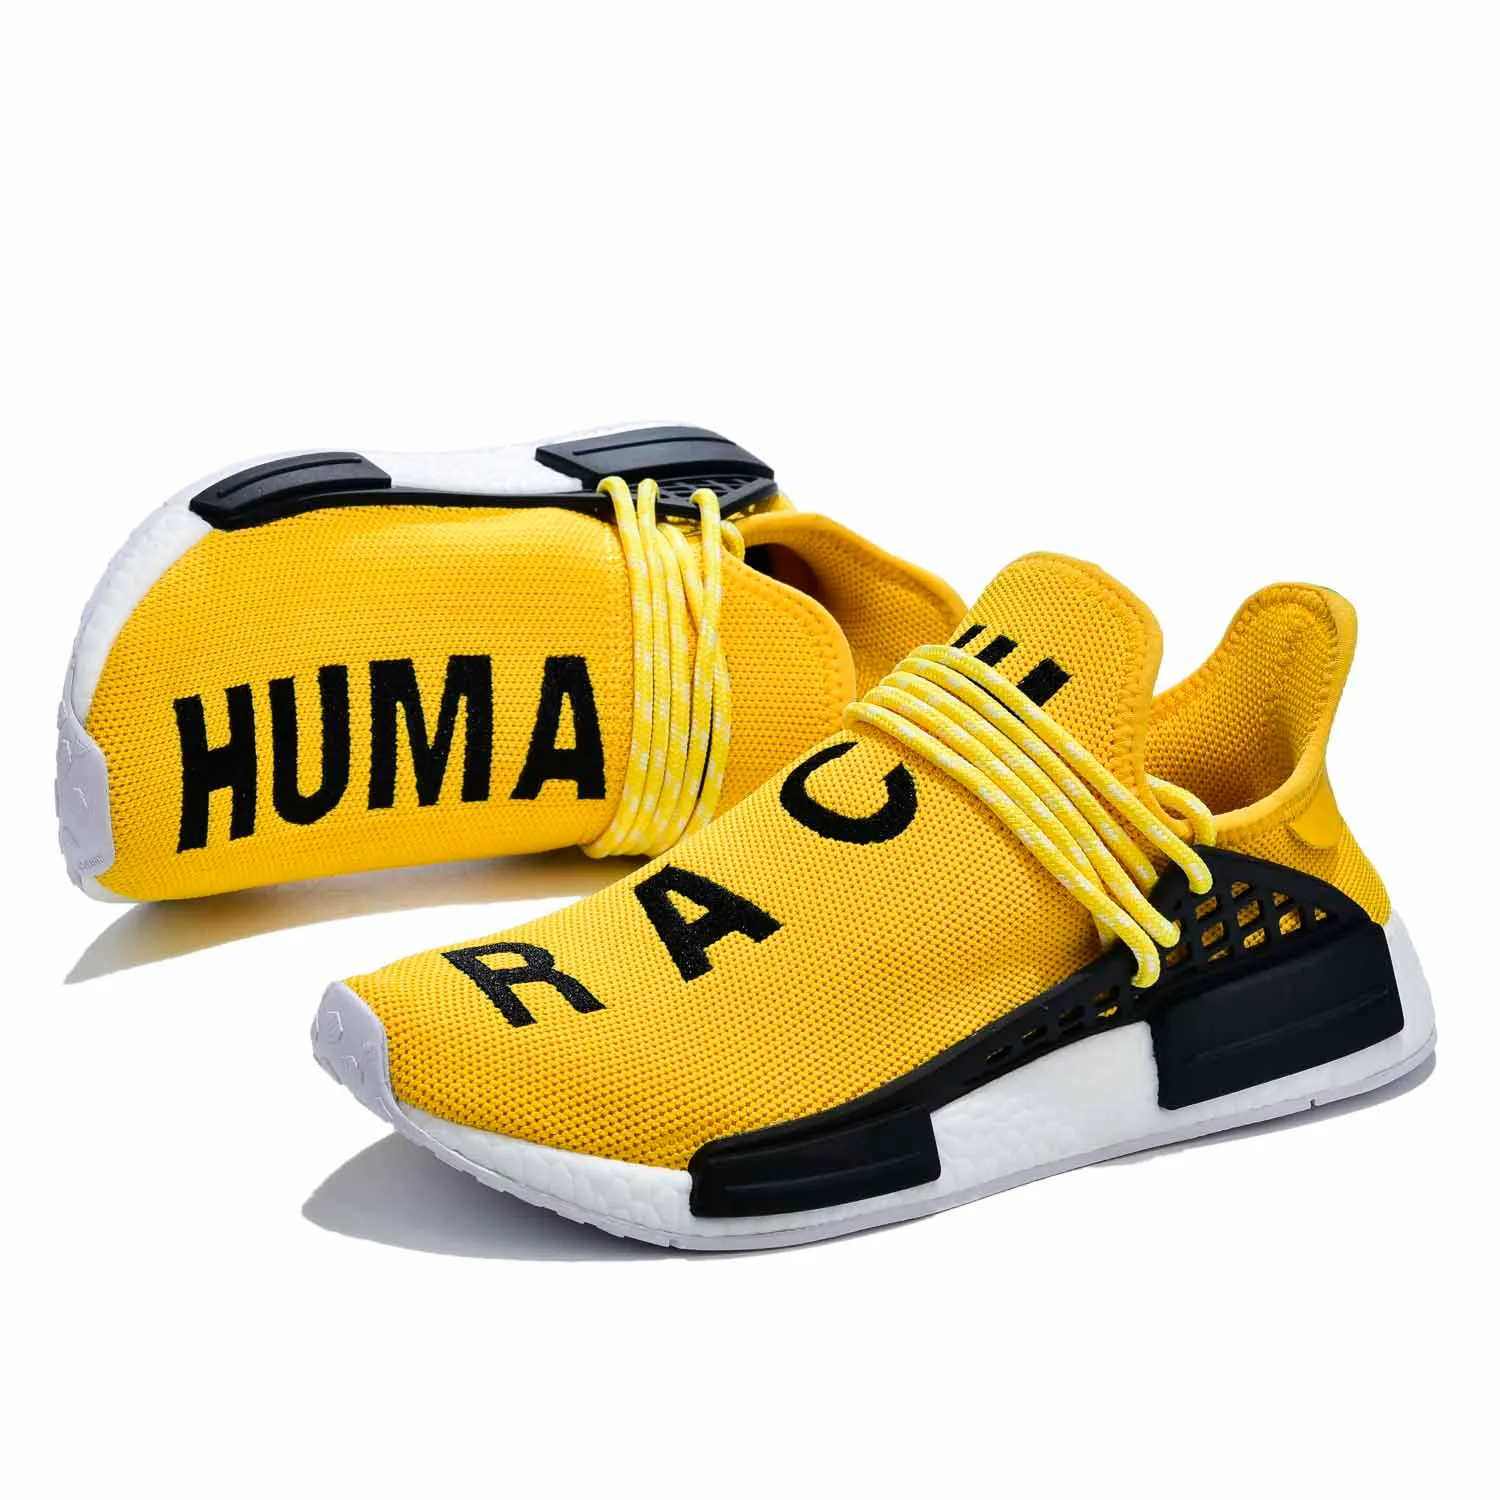 Pharrell Williams Nmd Human Race Nmd Shoes Zapatillas De Para Hombre Amarillas Solar Pack Equality PW Amarillas Zapatillas De Deporte Negras Para Por Dhgate_selected1, 48,47 € | DHgate